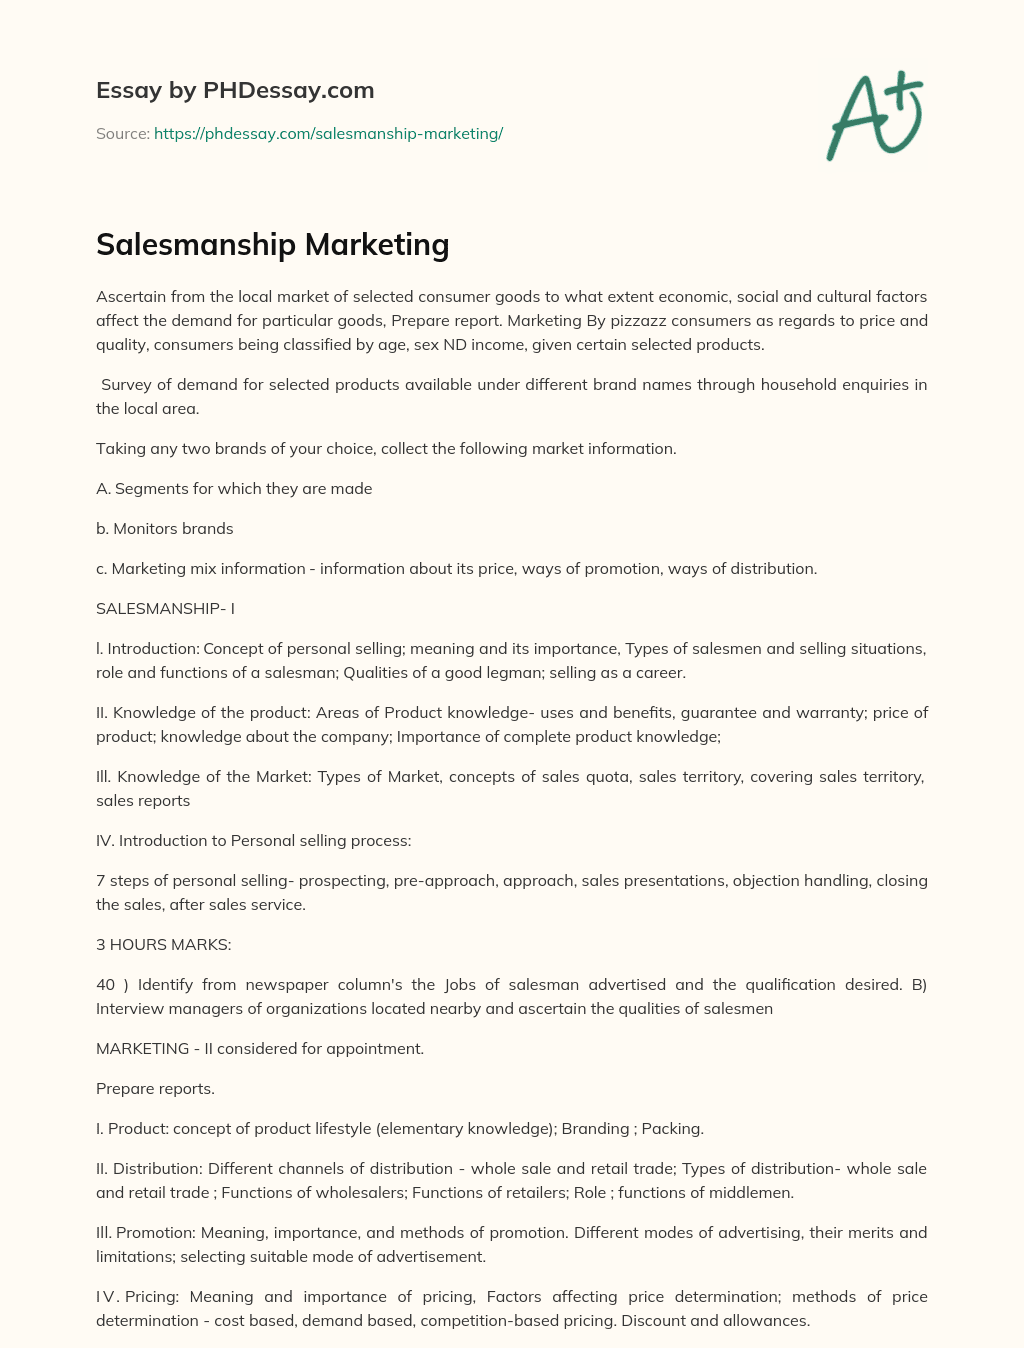 Salesmanship Marketing essay